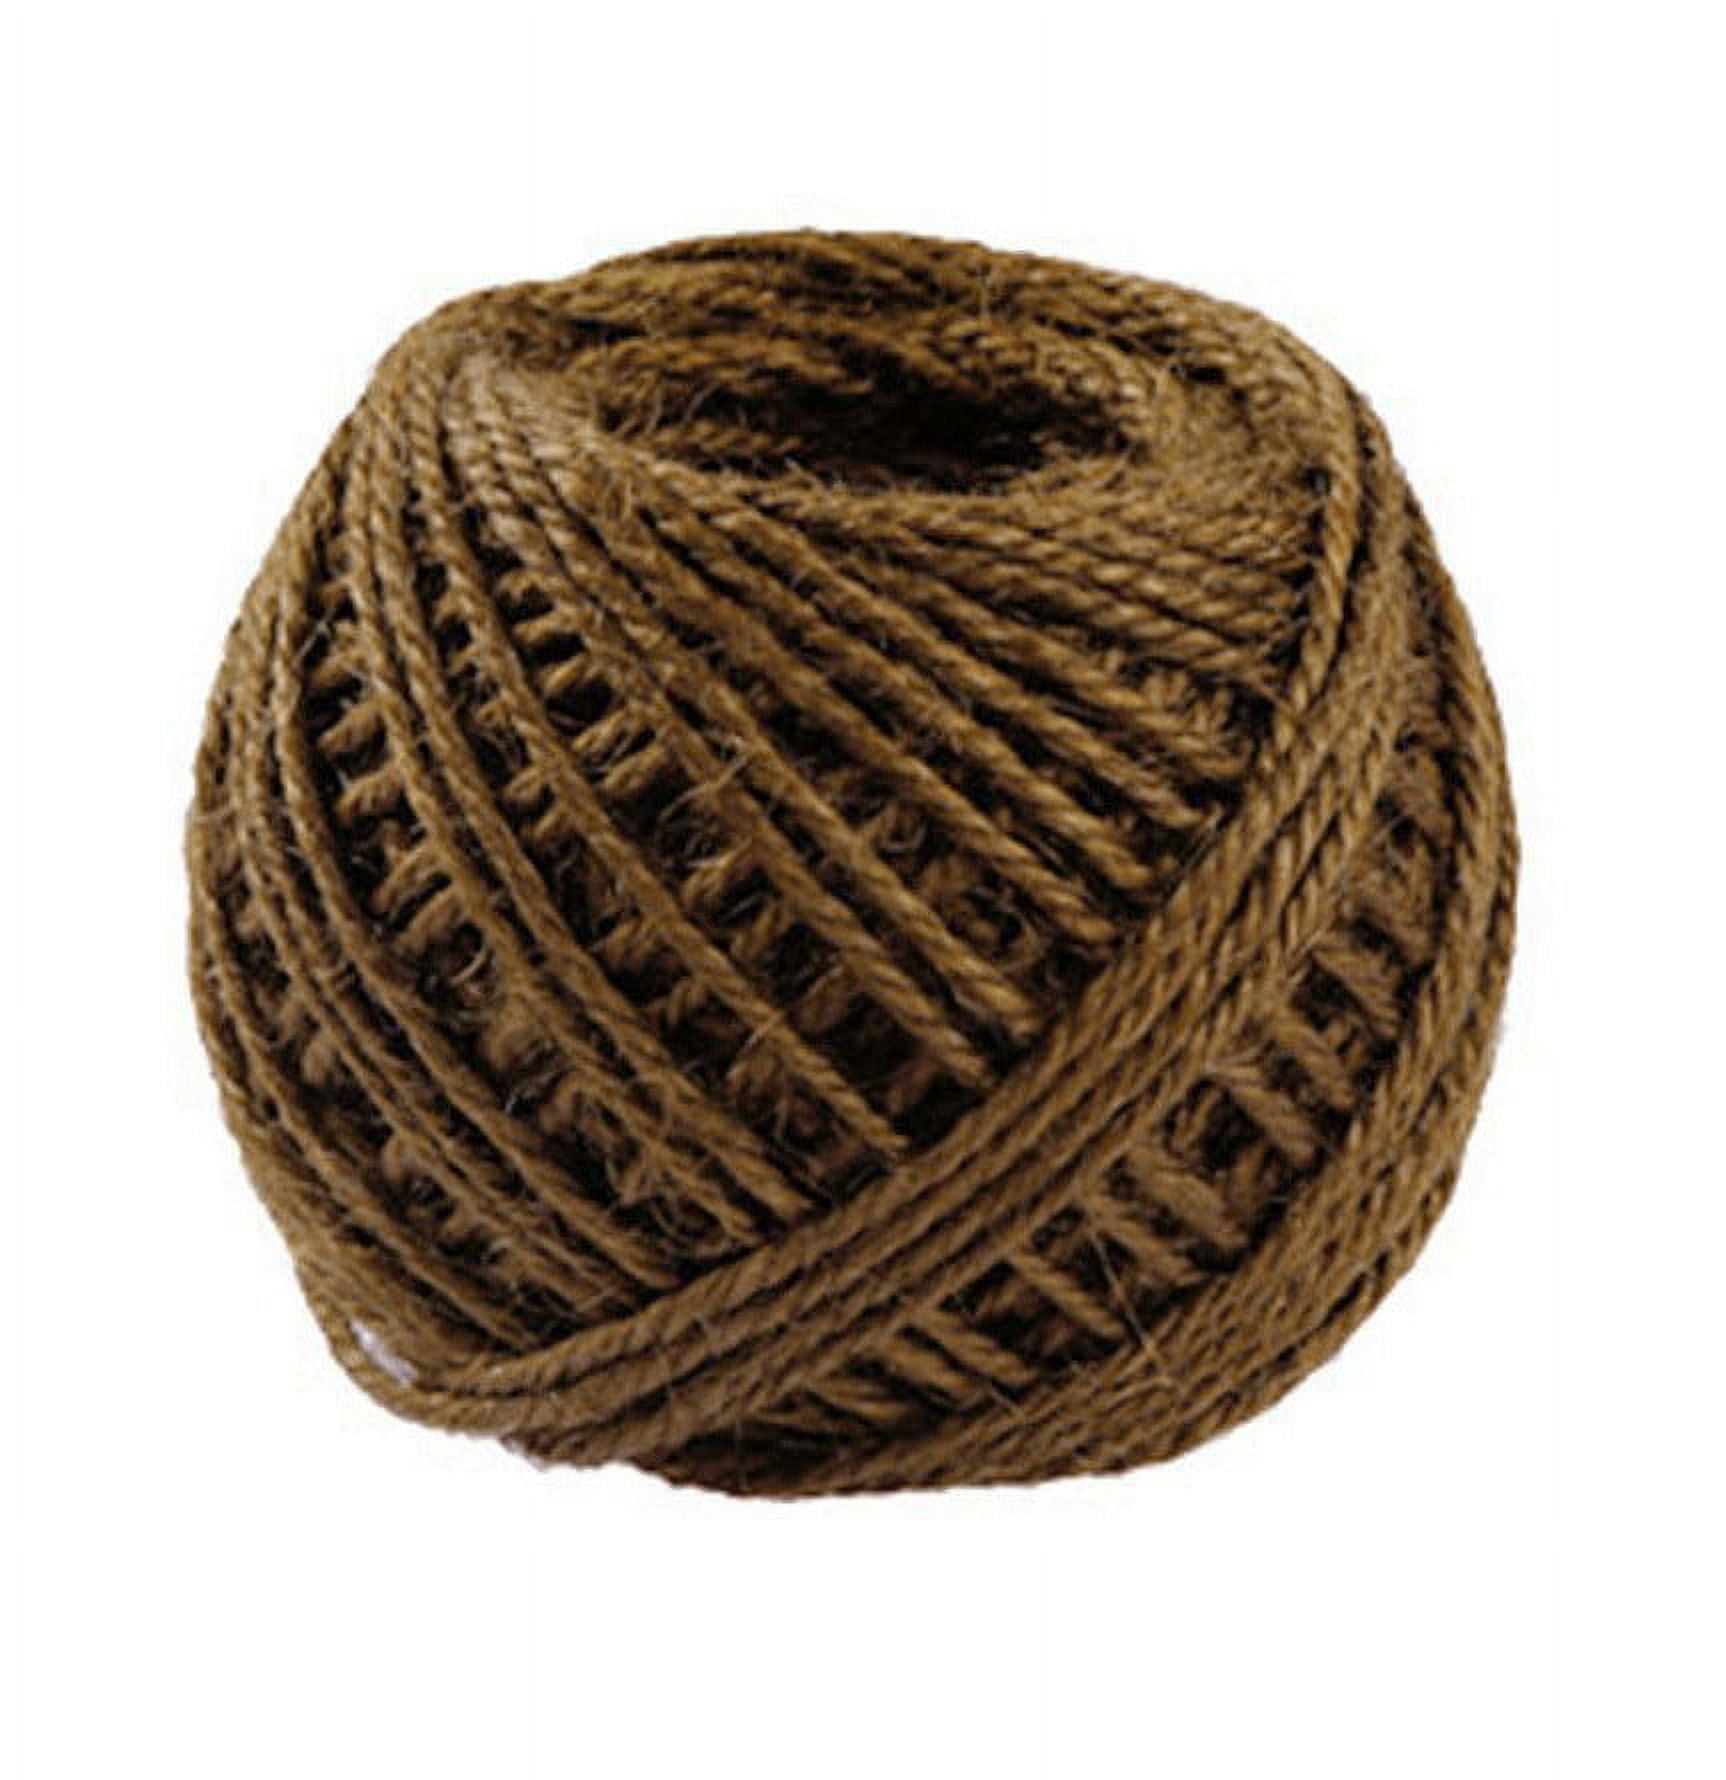 Shpwfbe Home Knitting & Crochet Supplies 40M Natural Brown Jute Hemp Rope  Twine String Cord Shank Craft String Diy Making 